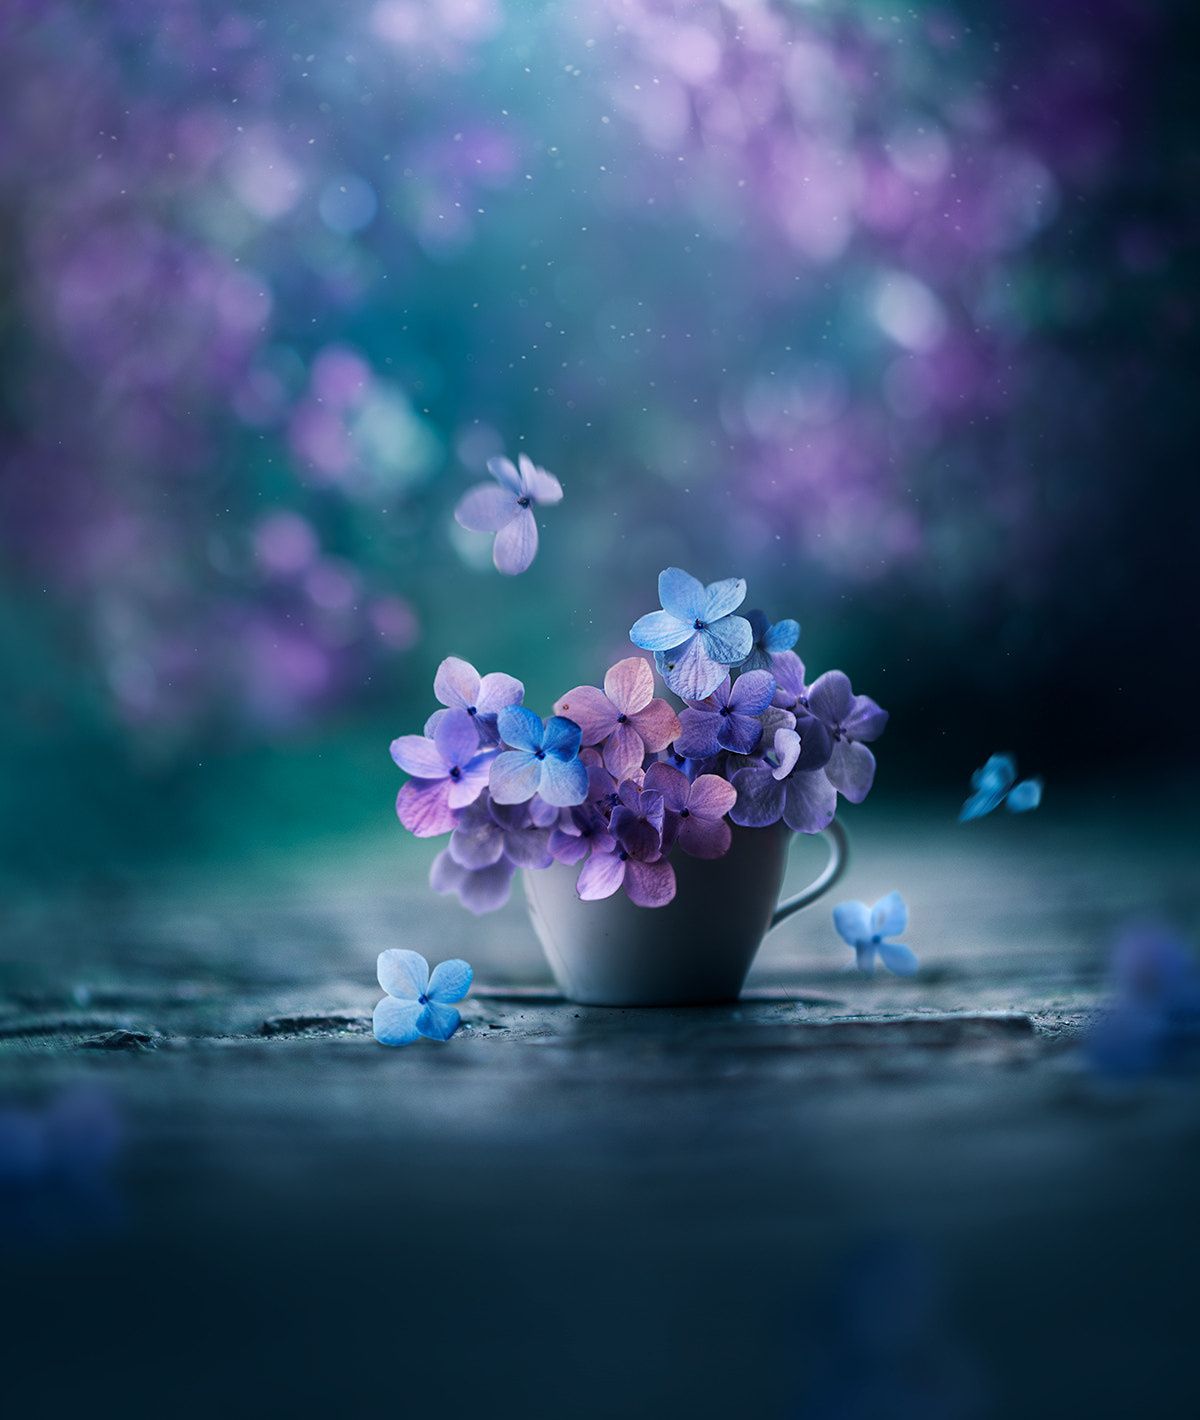 Magical flower photography by Ashraful Arefin Arefin